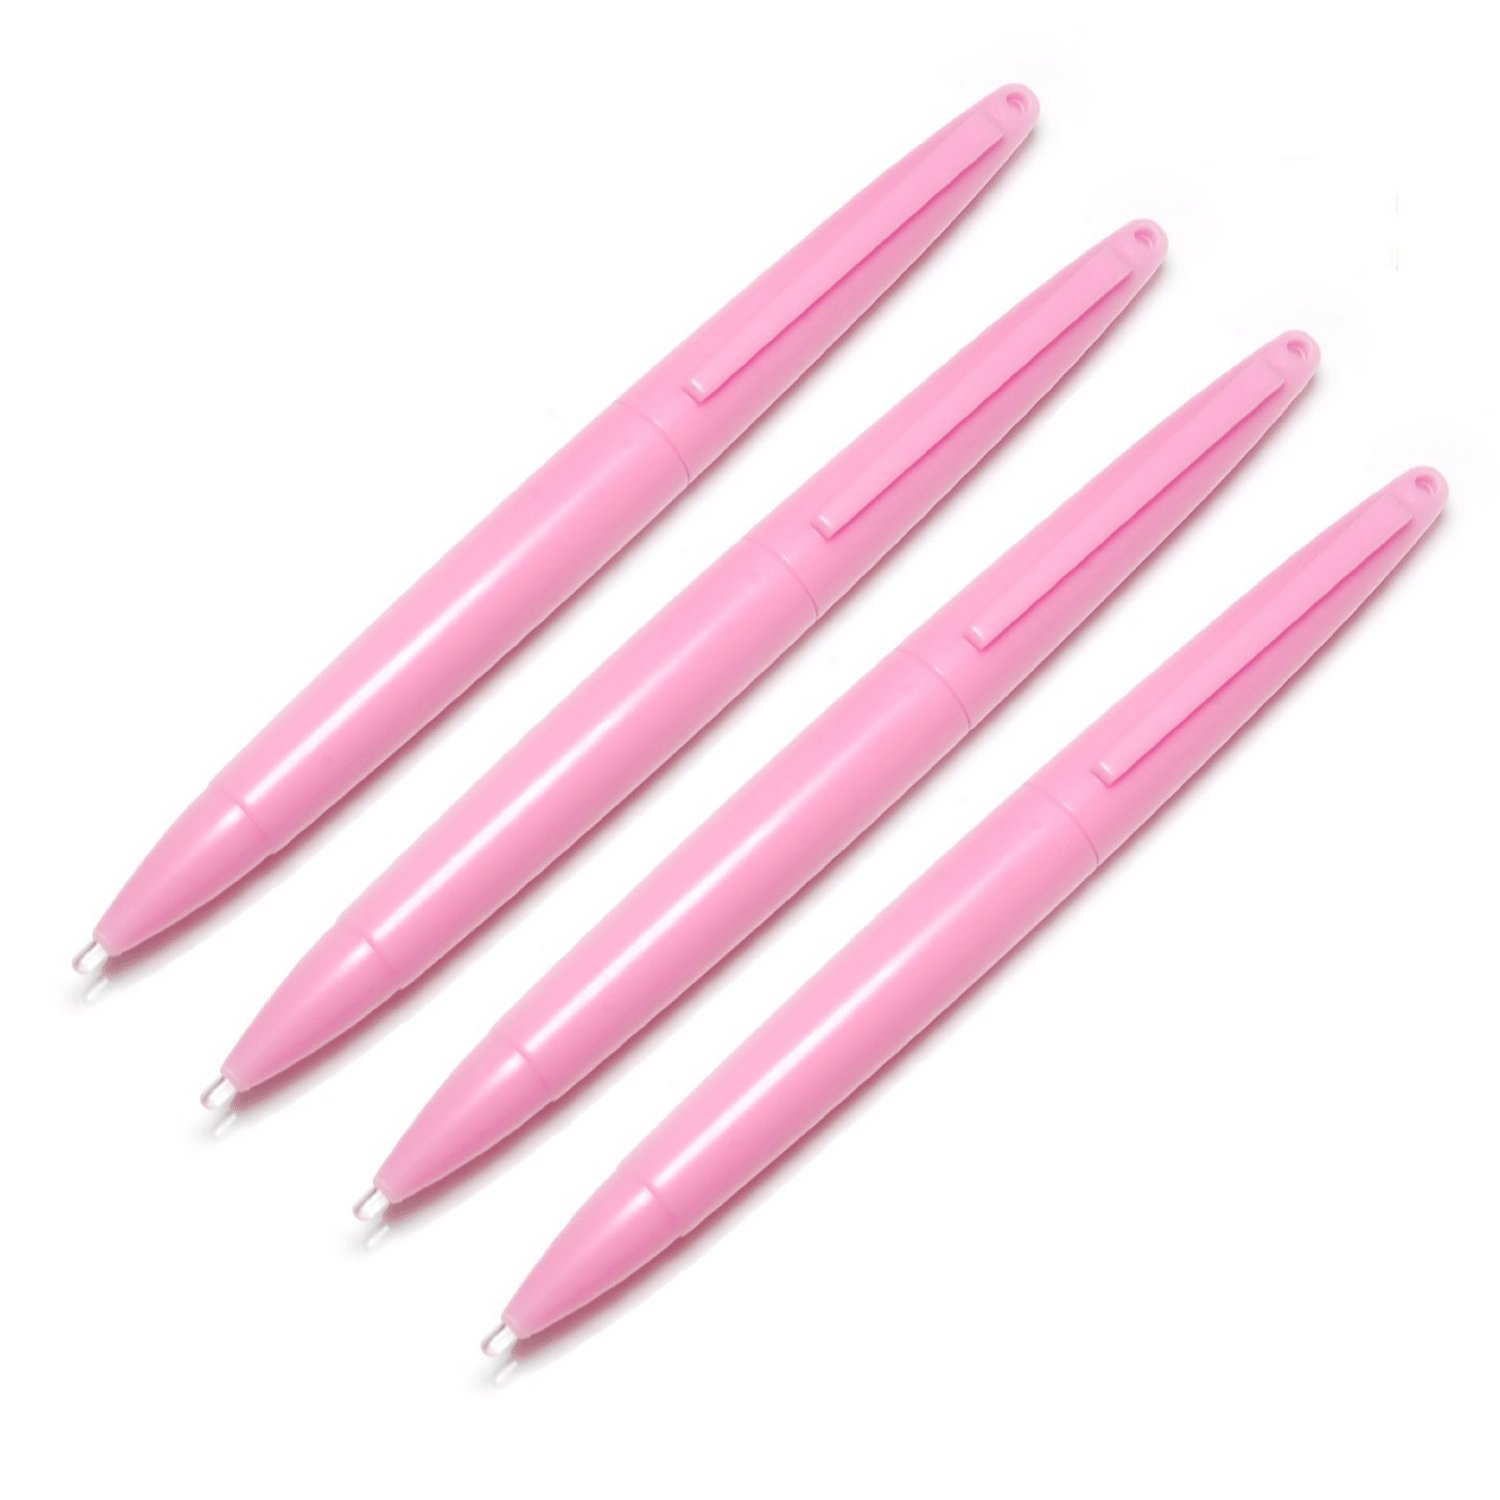 Pink stylus pen